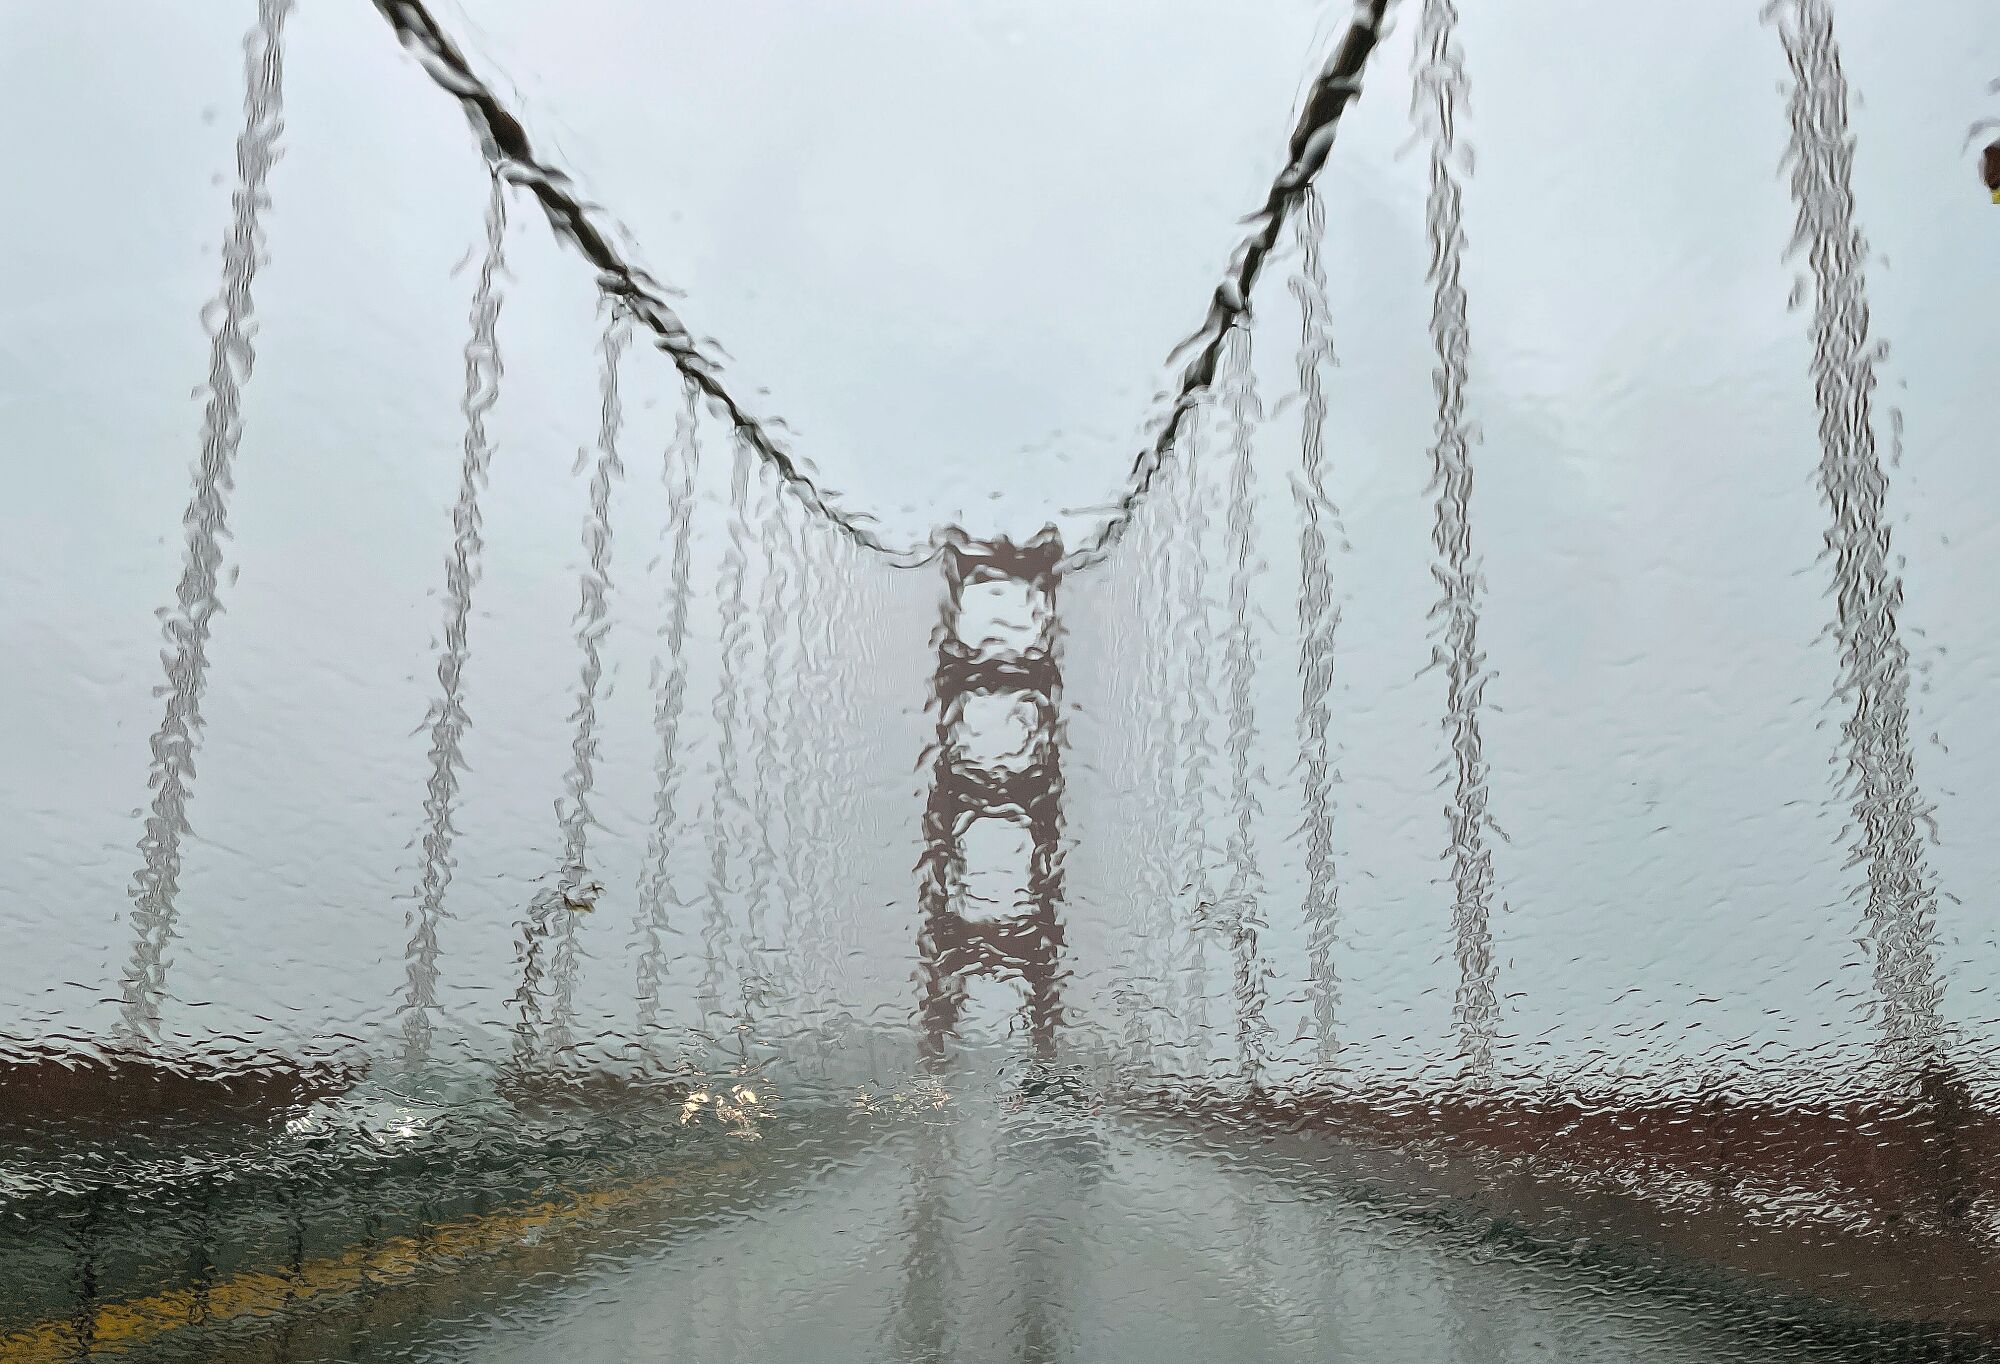 The Golden Gate Bridge on Wednesday.